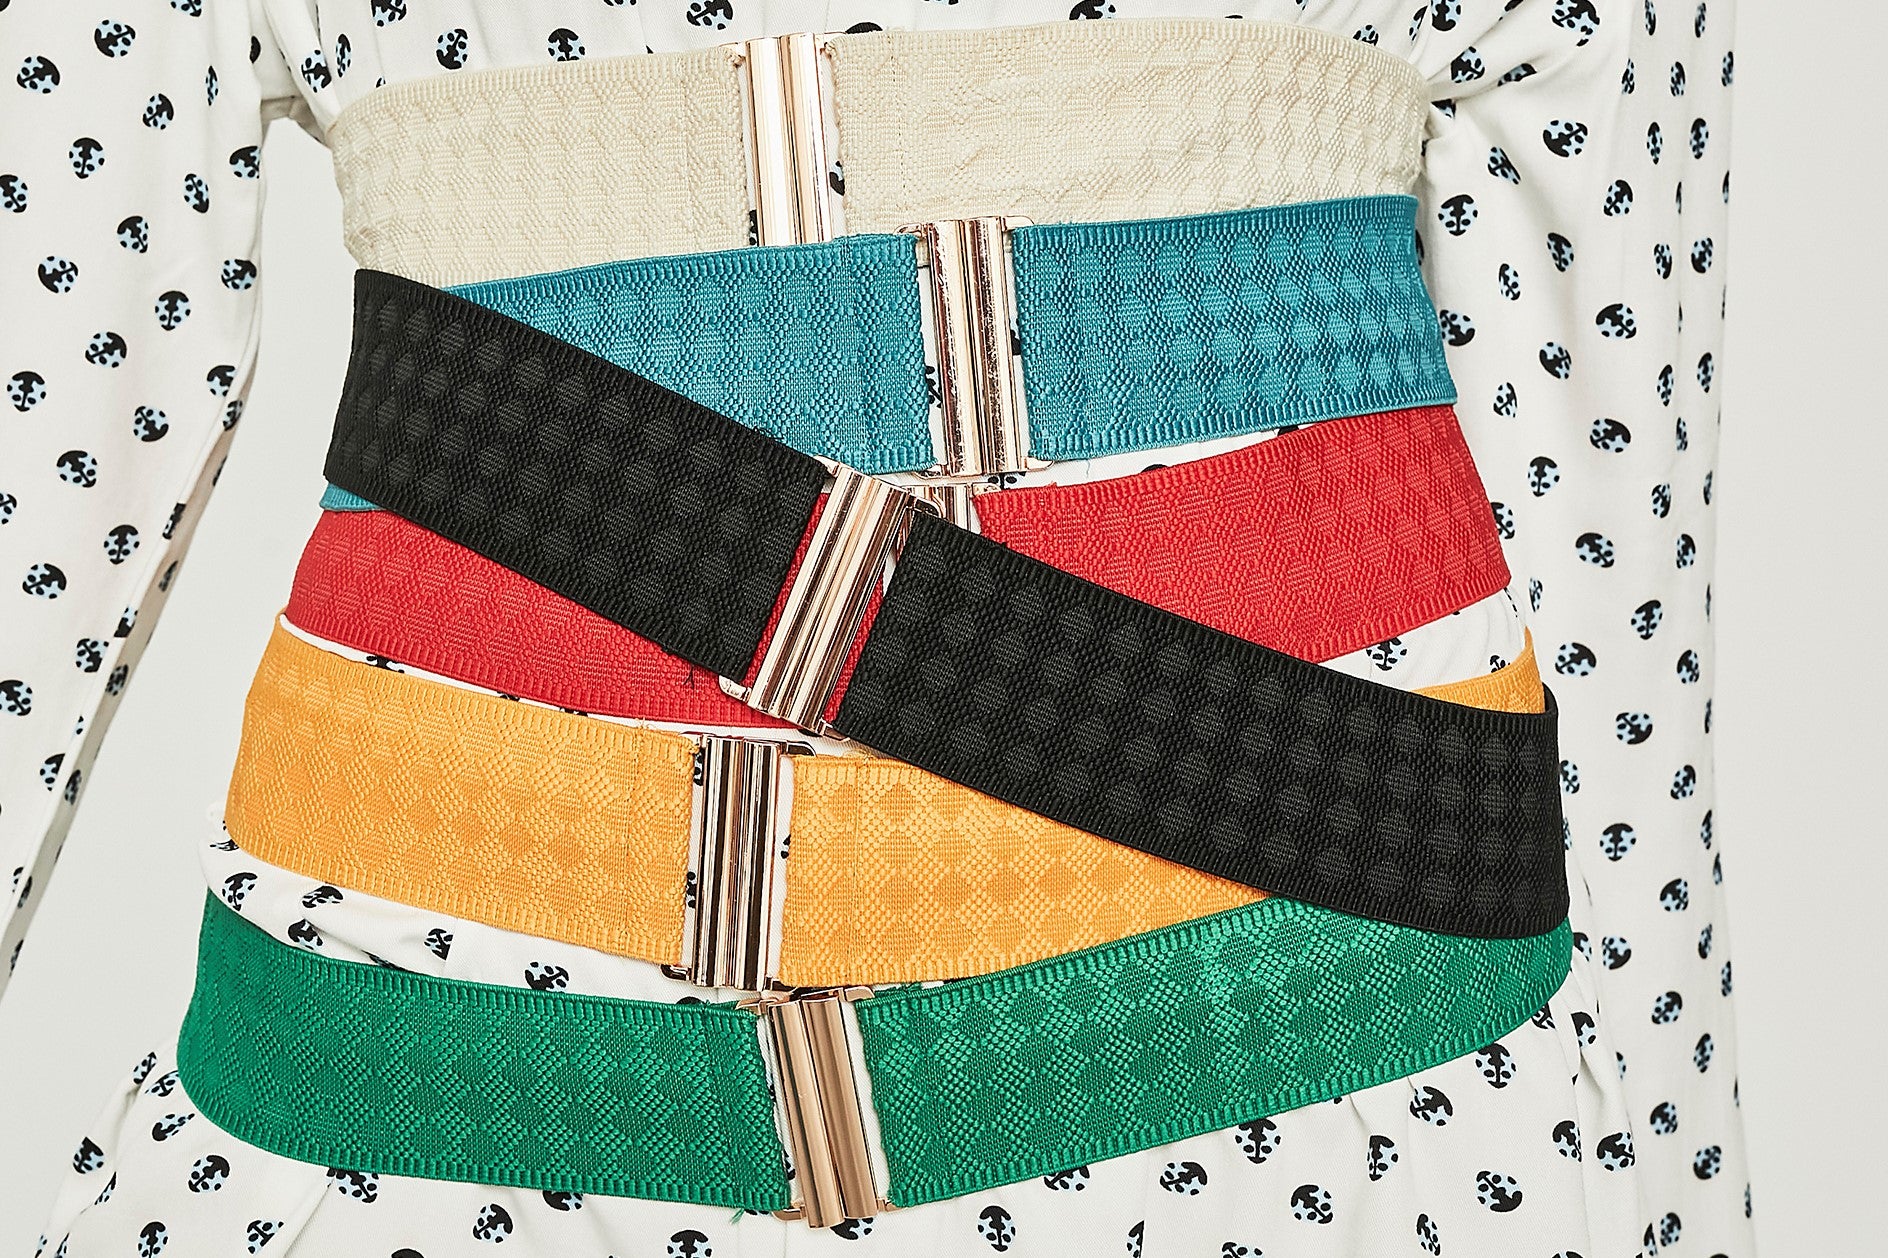 Colored elastic belts